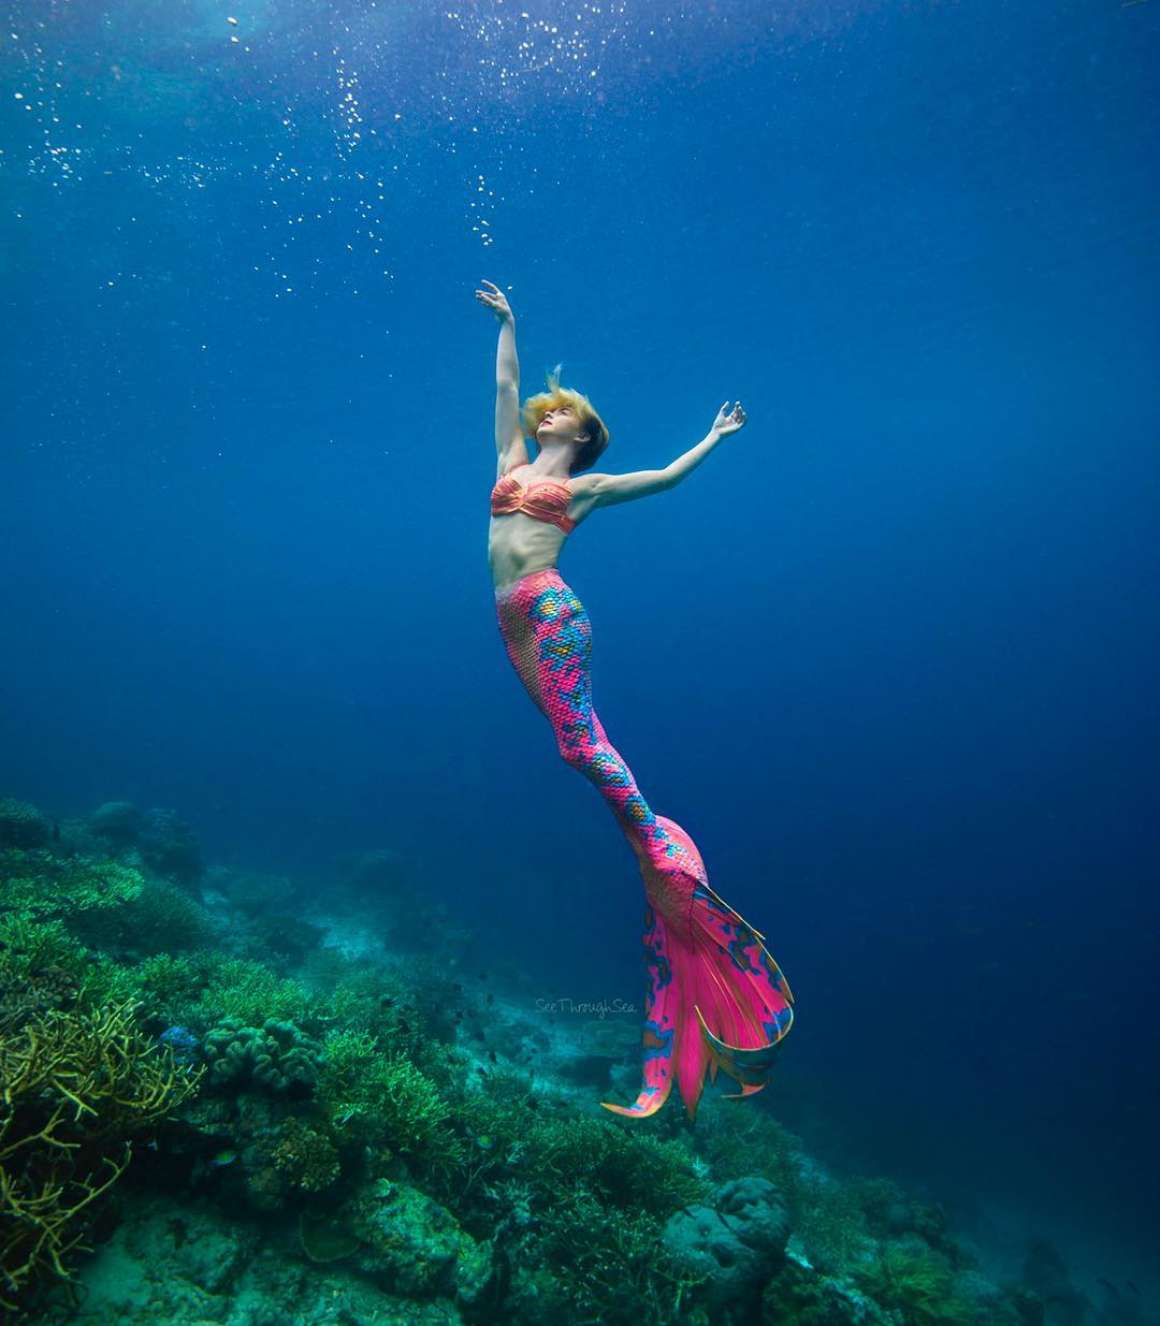 Julianne Hough as a Mermaid â€“ Instagram Pic